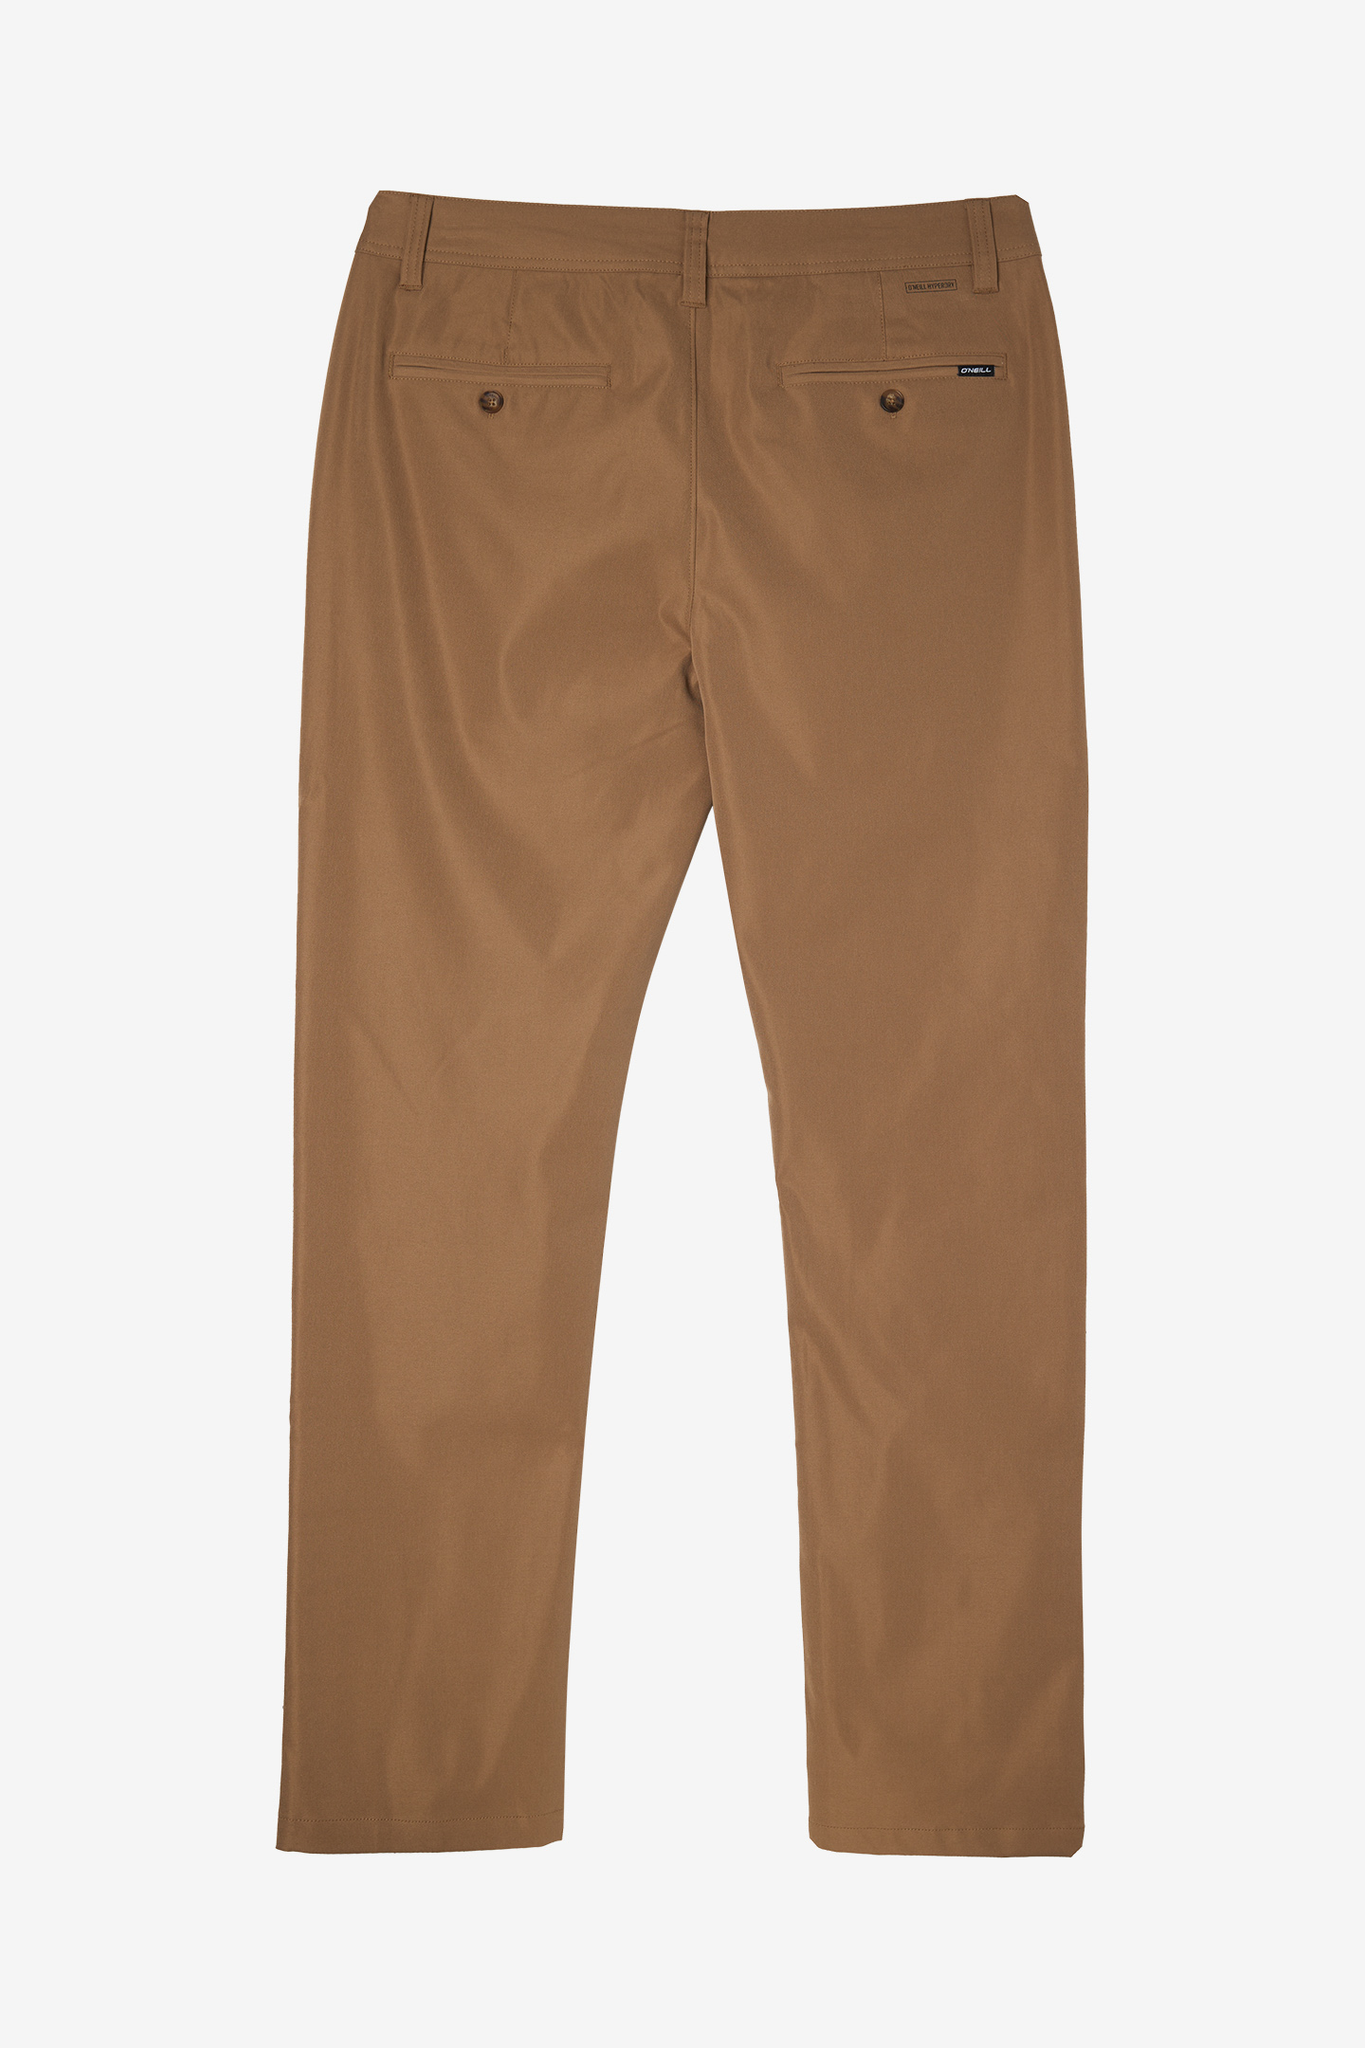 Set model 159532 La Aurora Pants, Trousers, Shorts Wholesale Clothing  Matterhorn